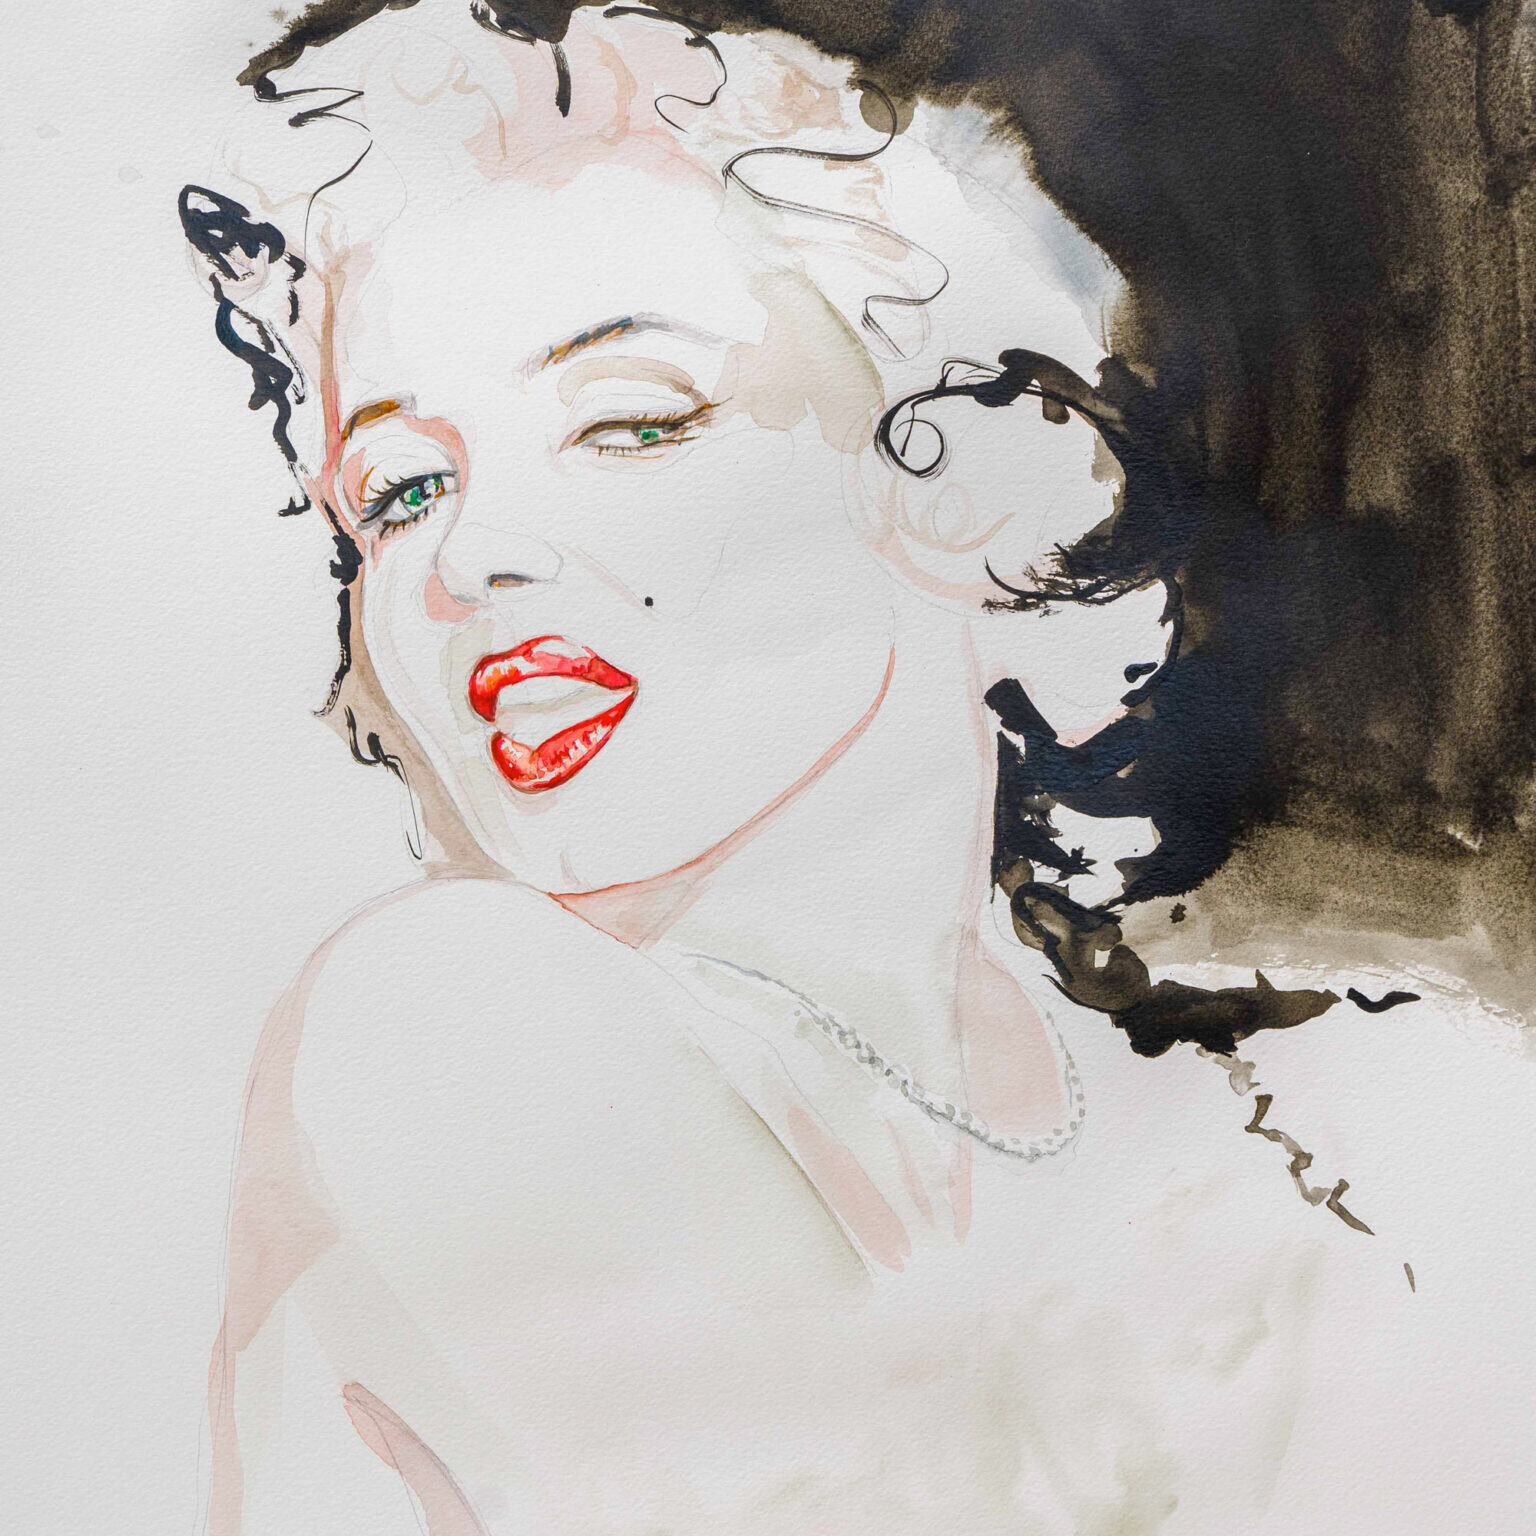 Marilyn Monroe wall art